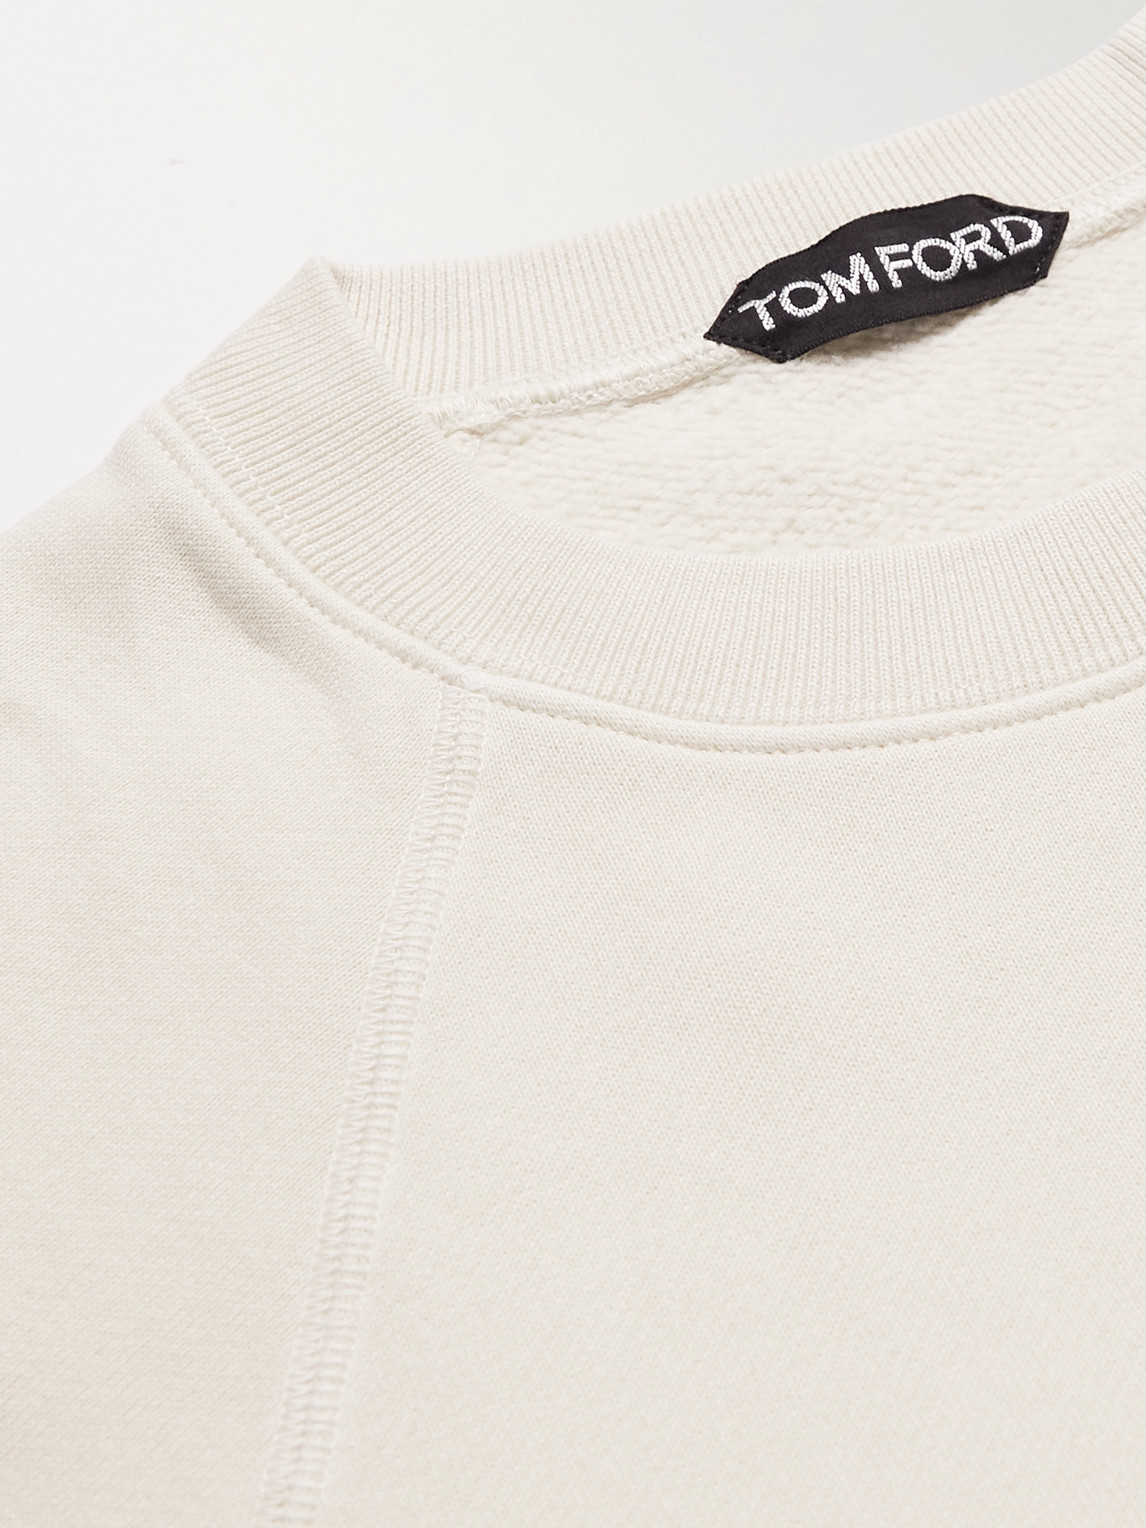 Shop Tom Ford Garment-dyed Cotton-jersey Sweatshirt In Neutrals